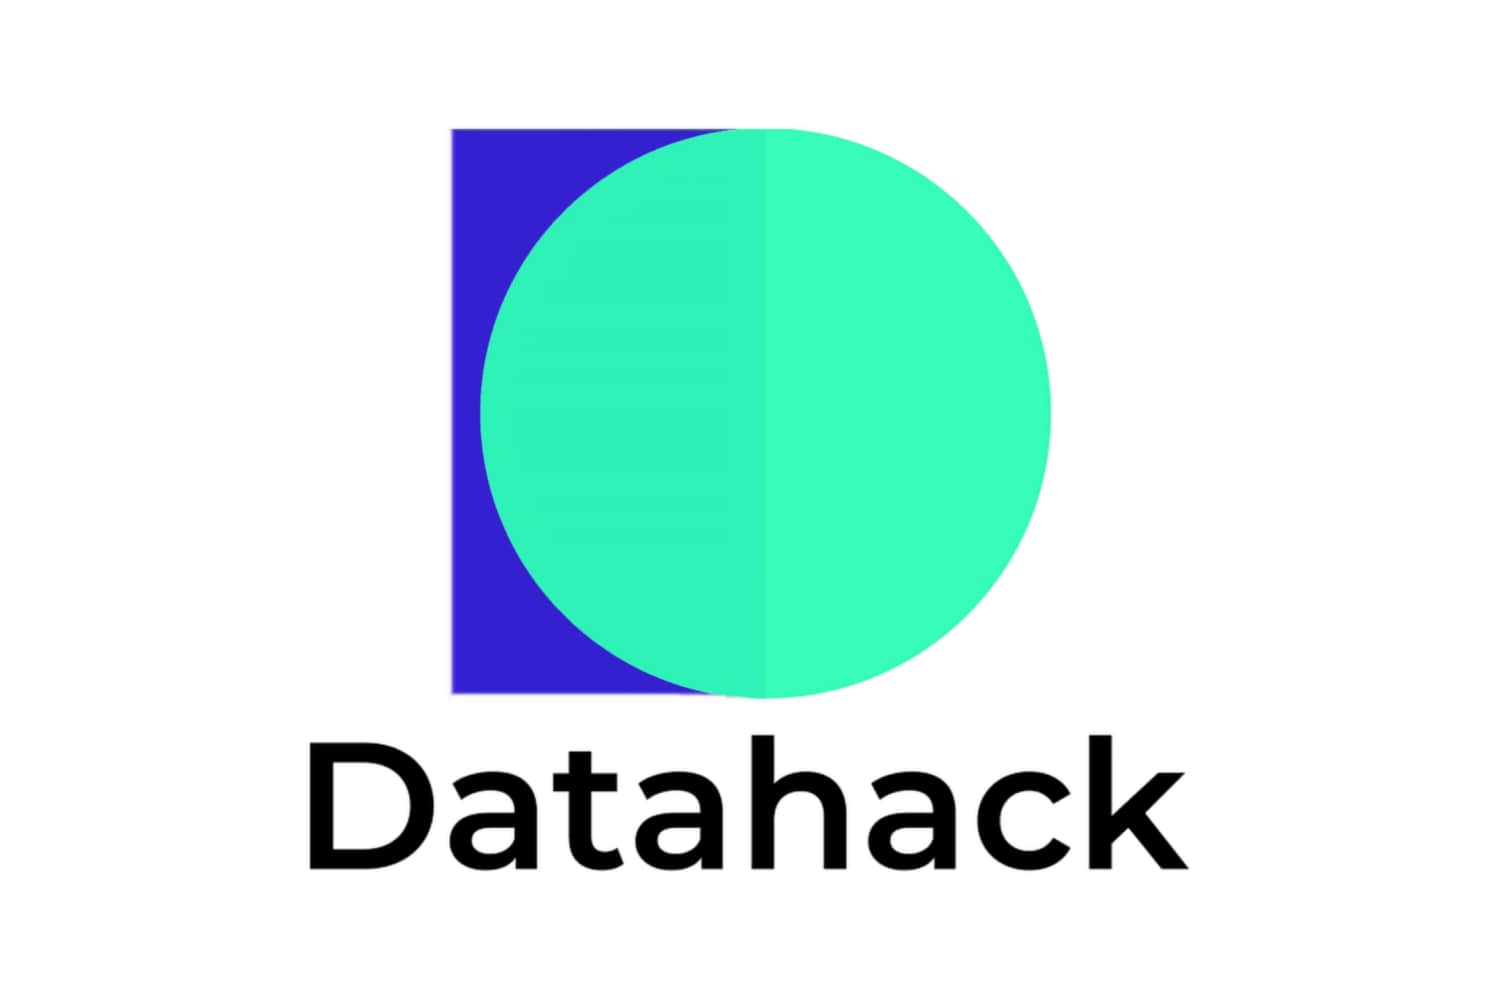 Datahack logo